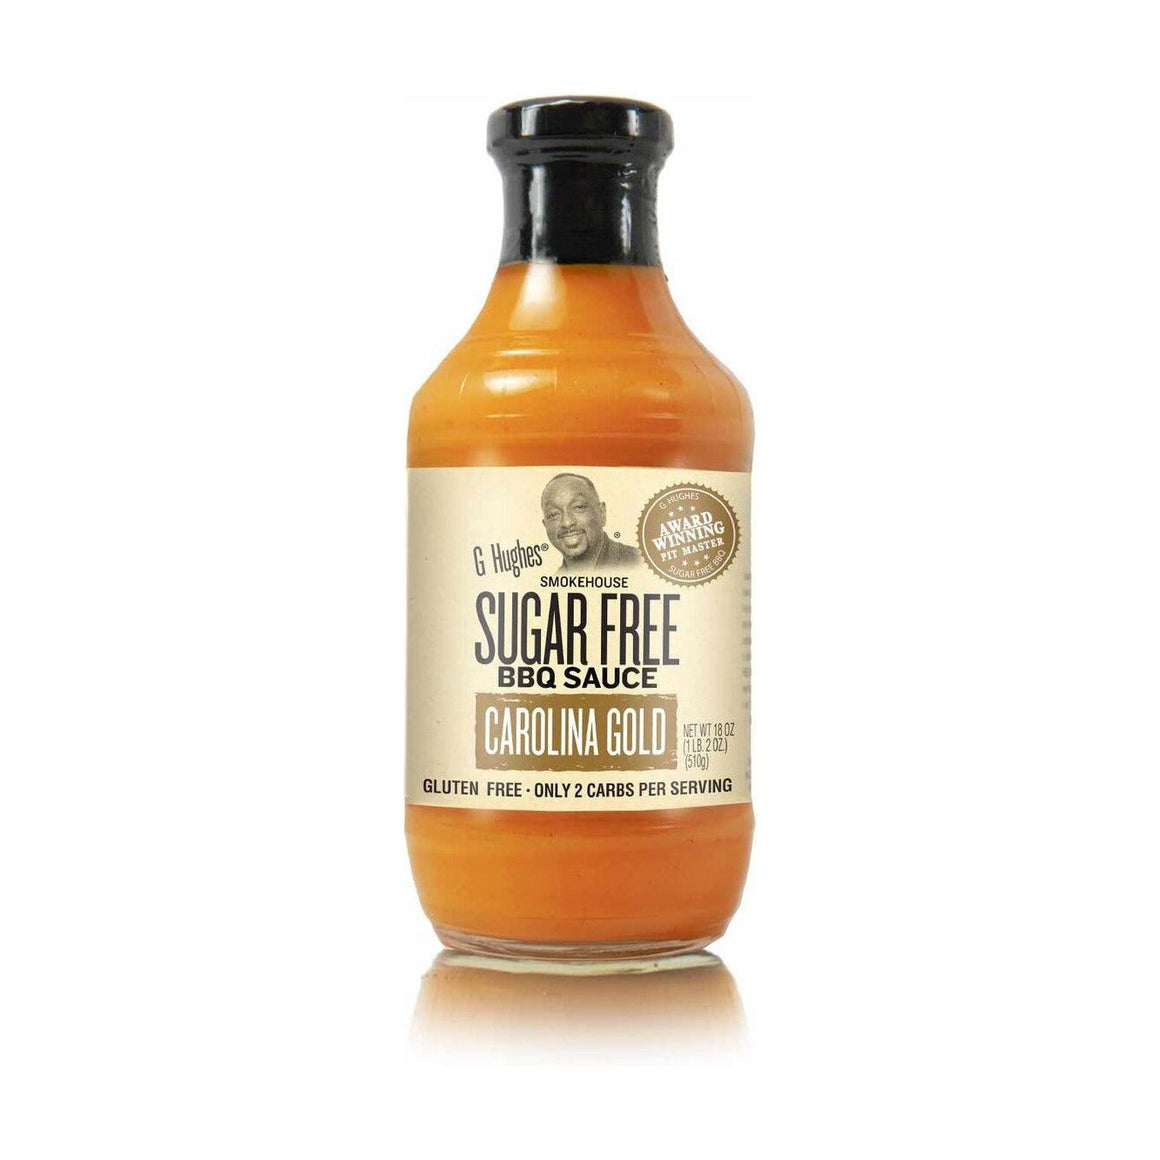 G Hughes Smokehouse - Sugar Free BBQ Sauce - Carolina Gold - 18 oz.